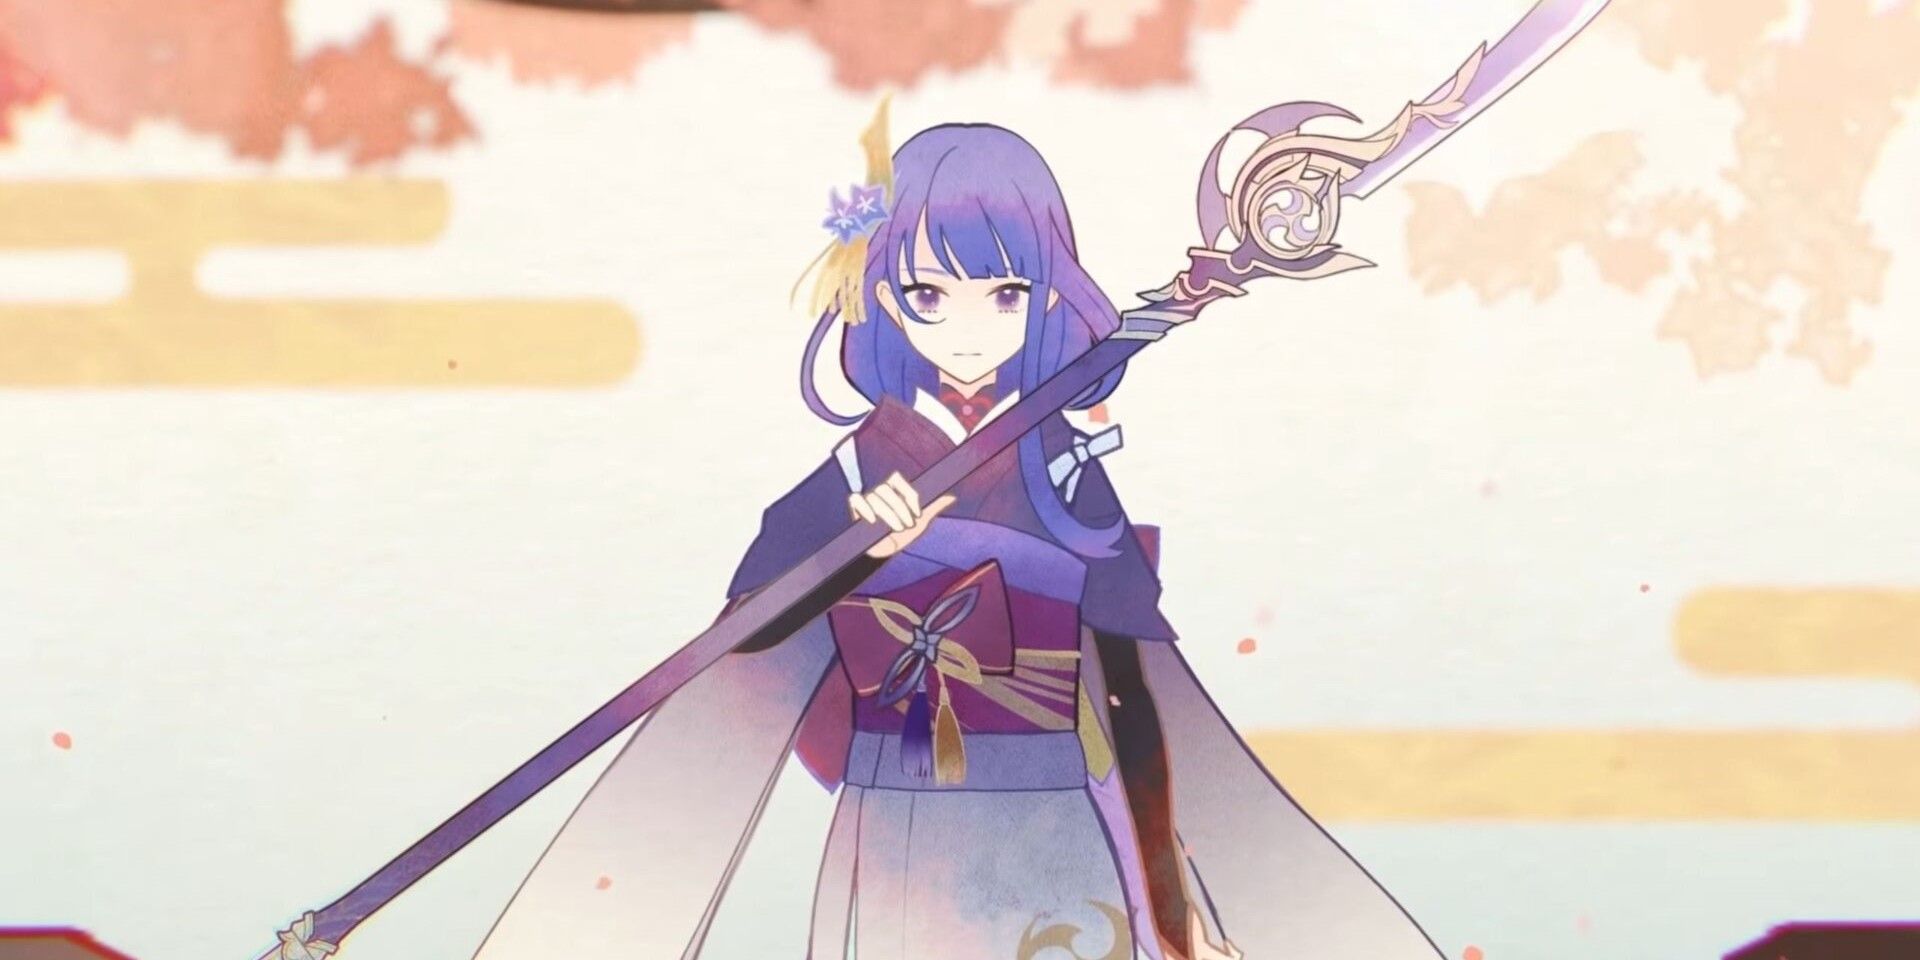 Genshin Impact's Raiden Shogun with her polearm